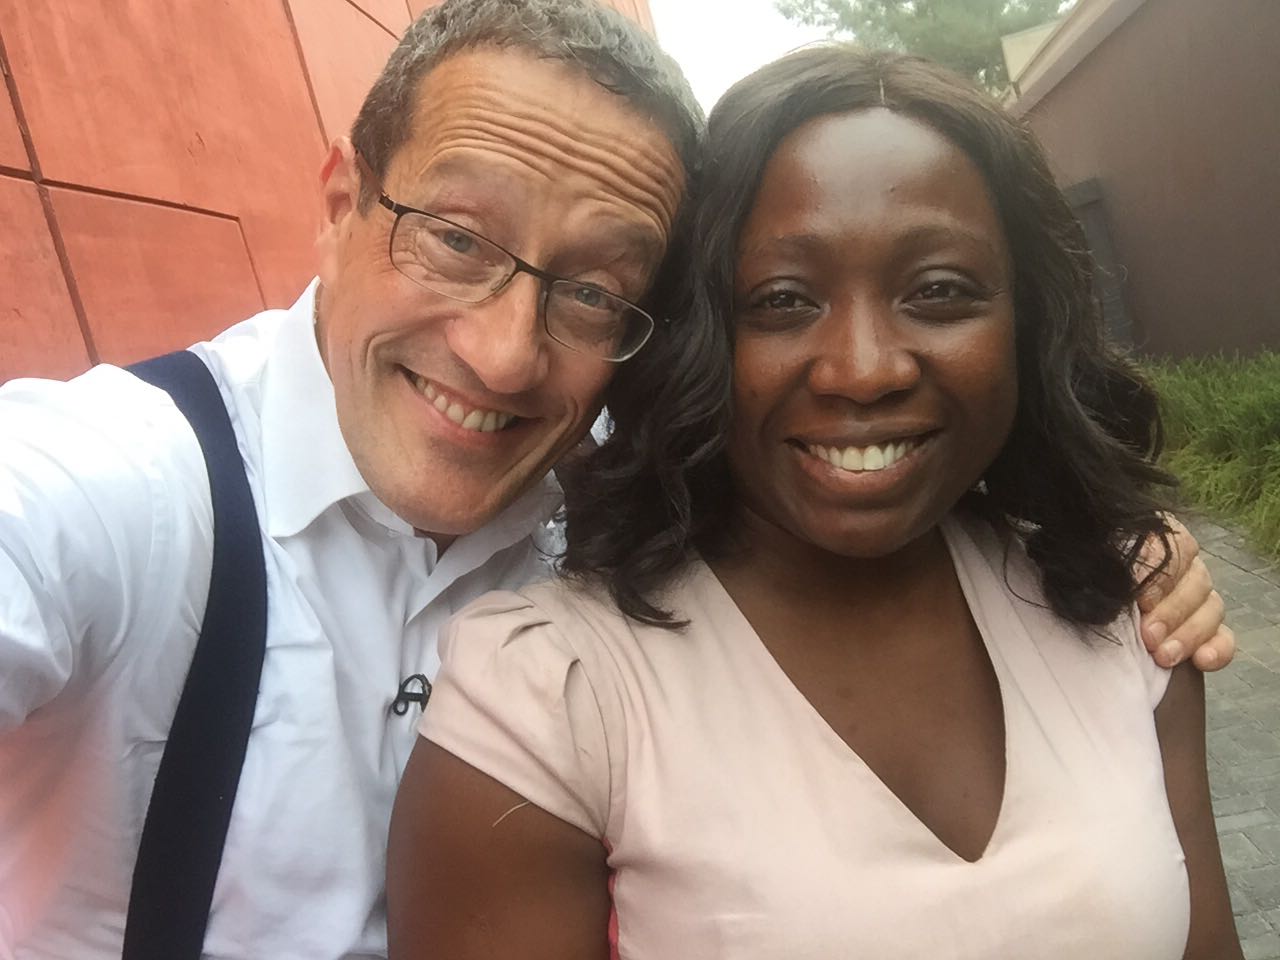 Selfie with Lagos bureau chief and his host in Nigeria, Stephanie Busari